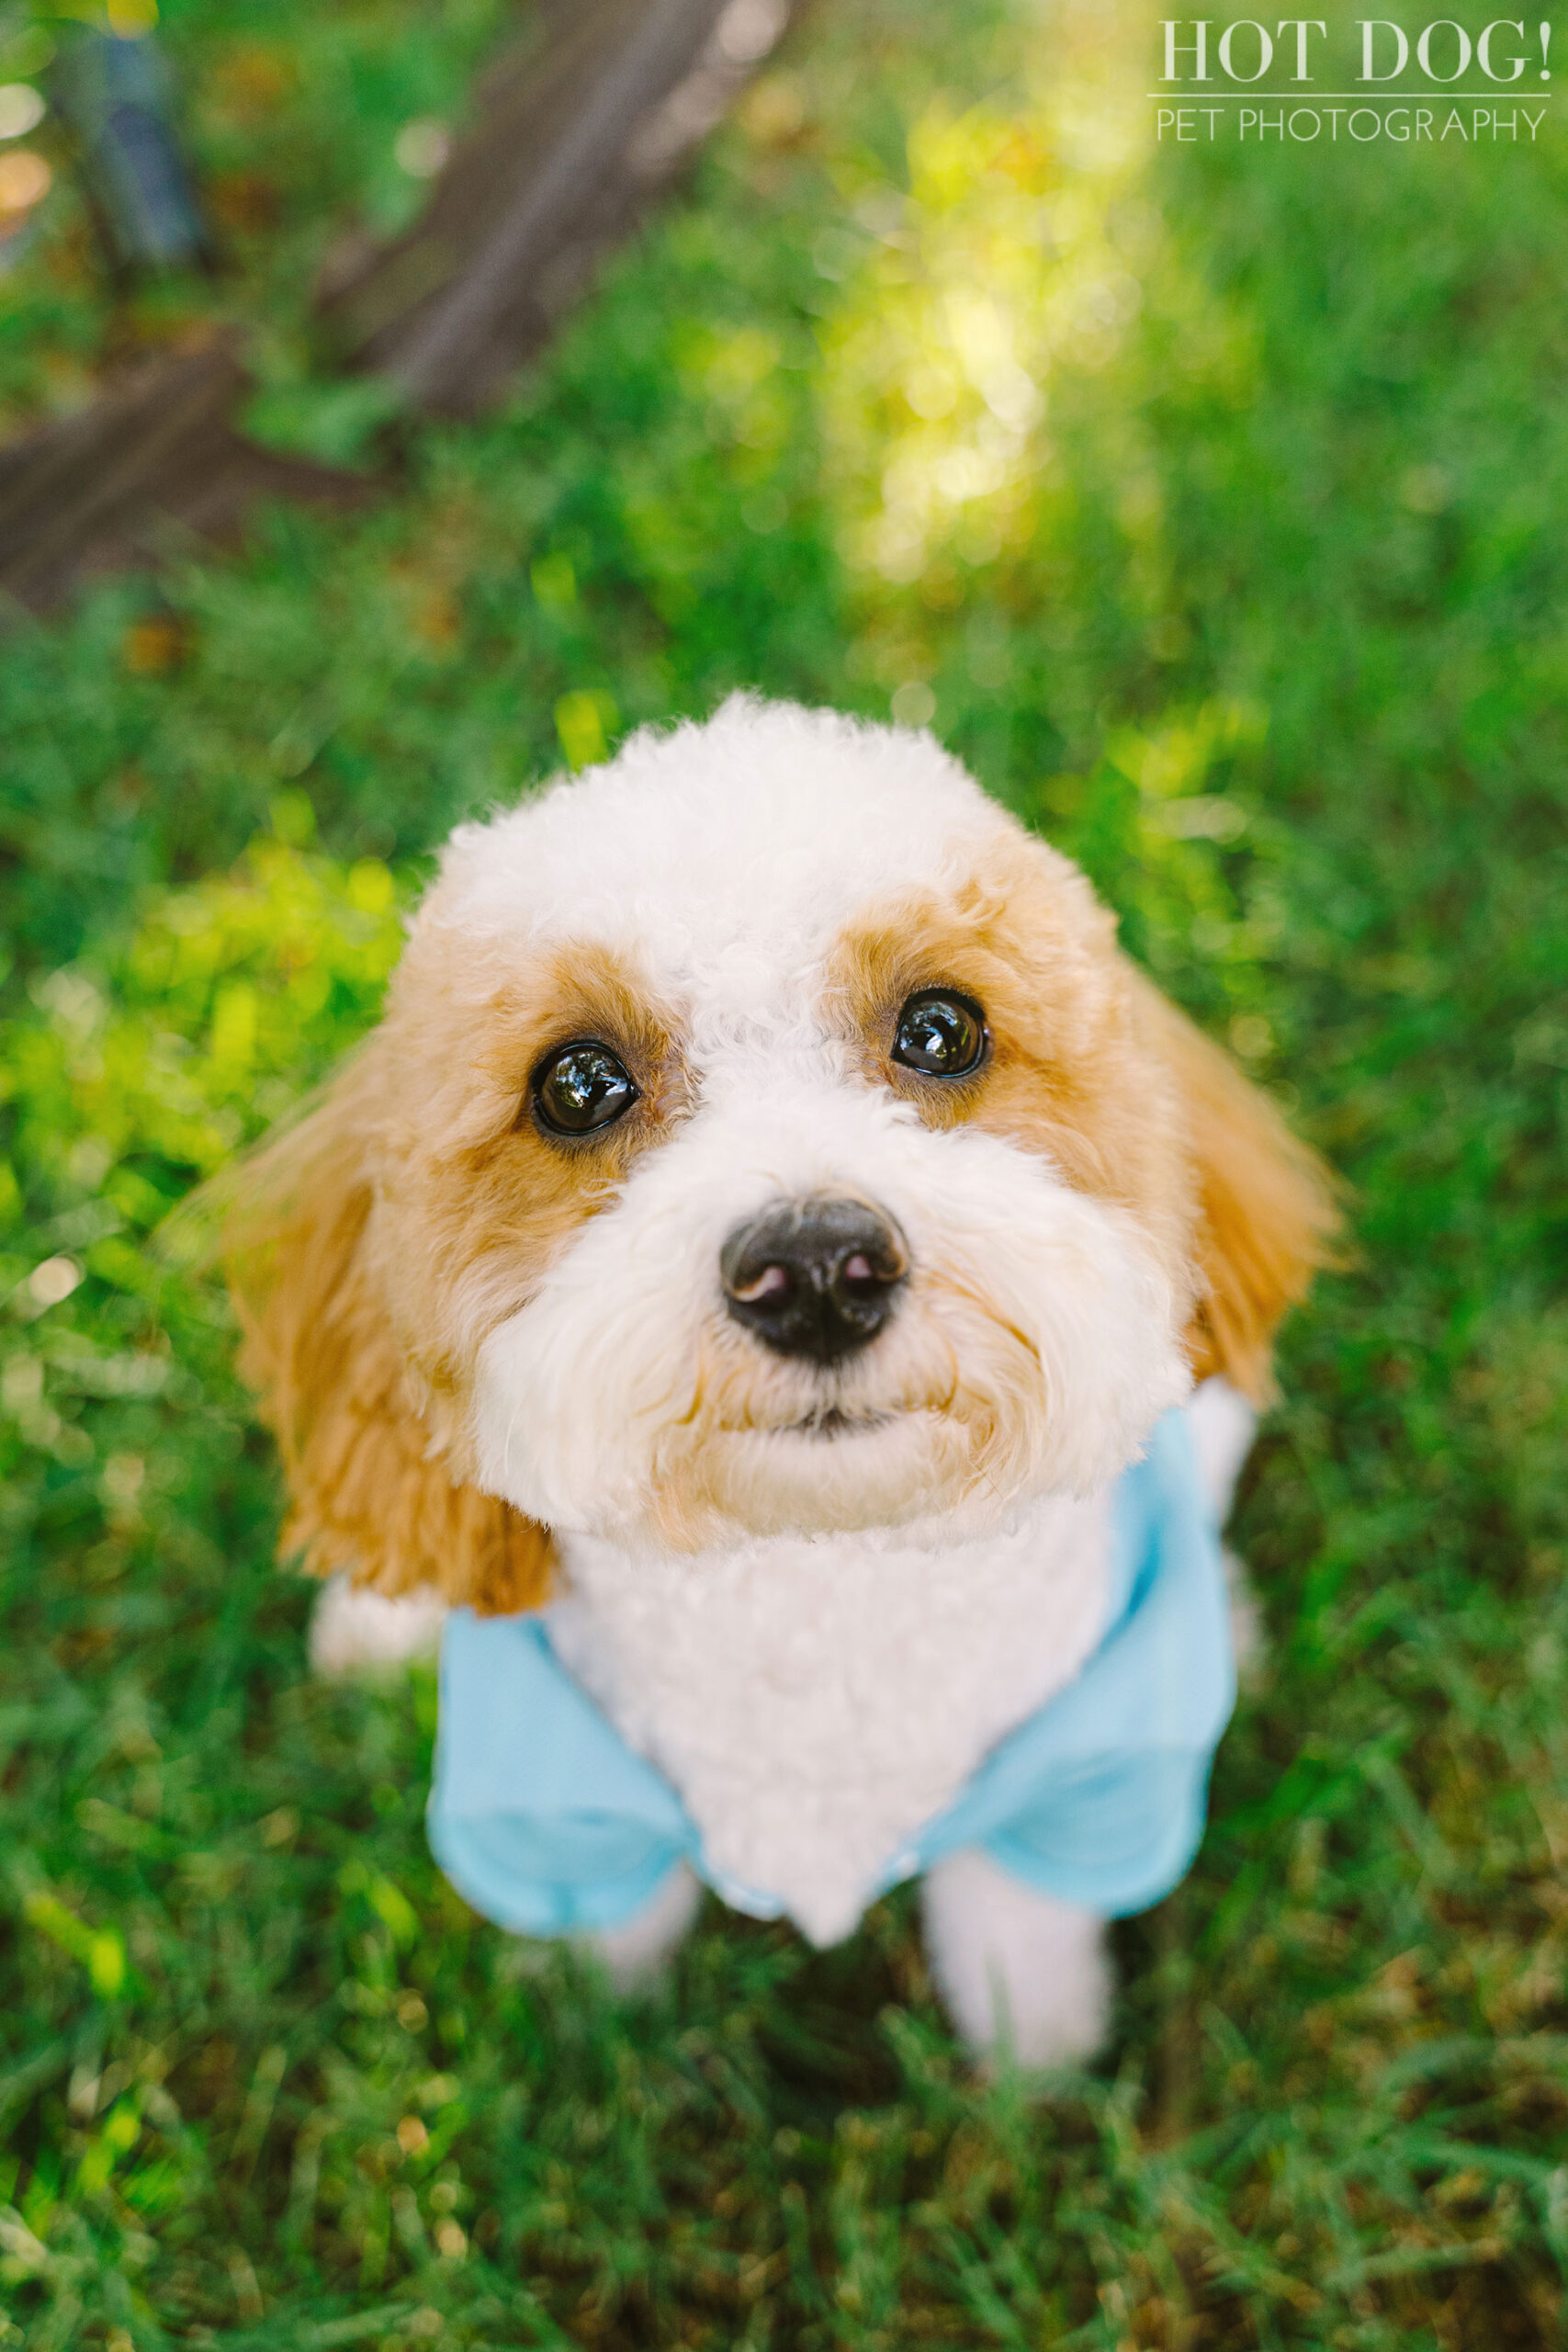 Orlando pet photographer Hot Dog! Pet Photography captures adorable Malchipoo puppies in stunning photos.